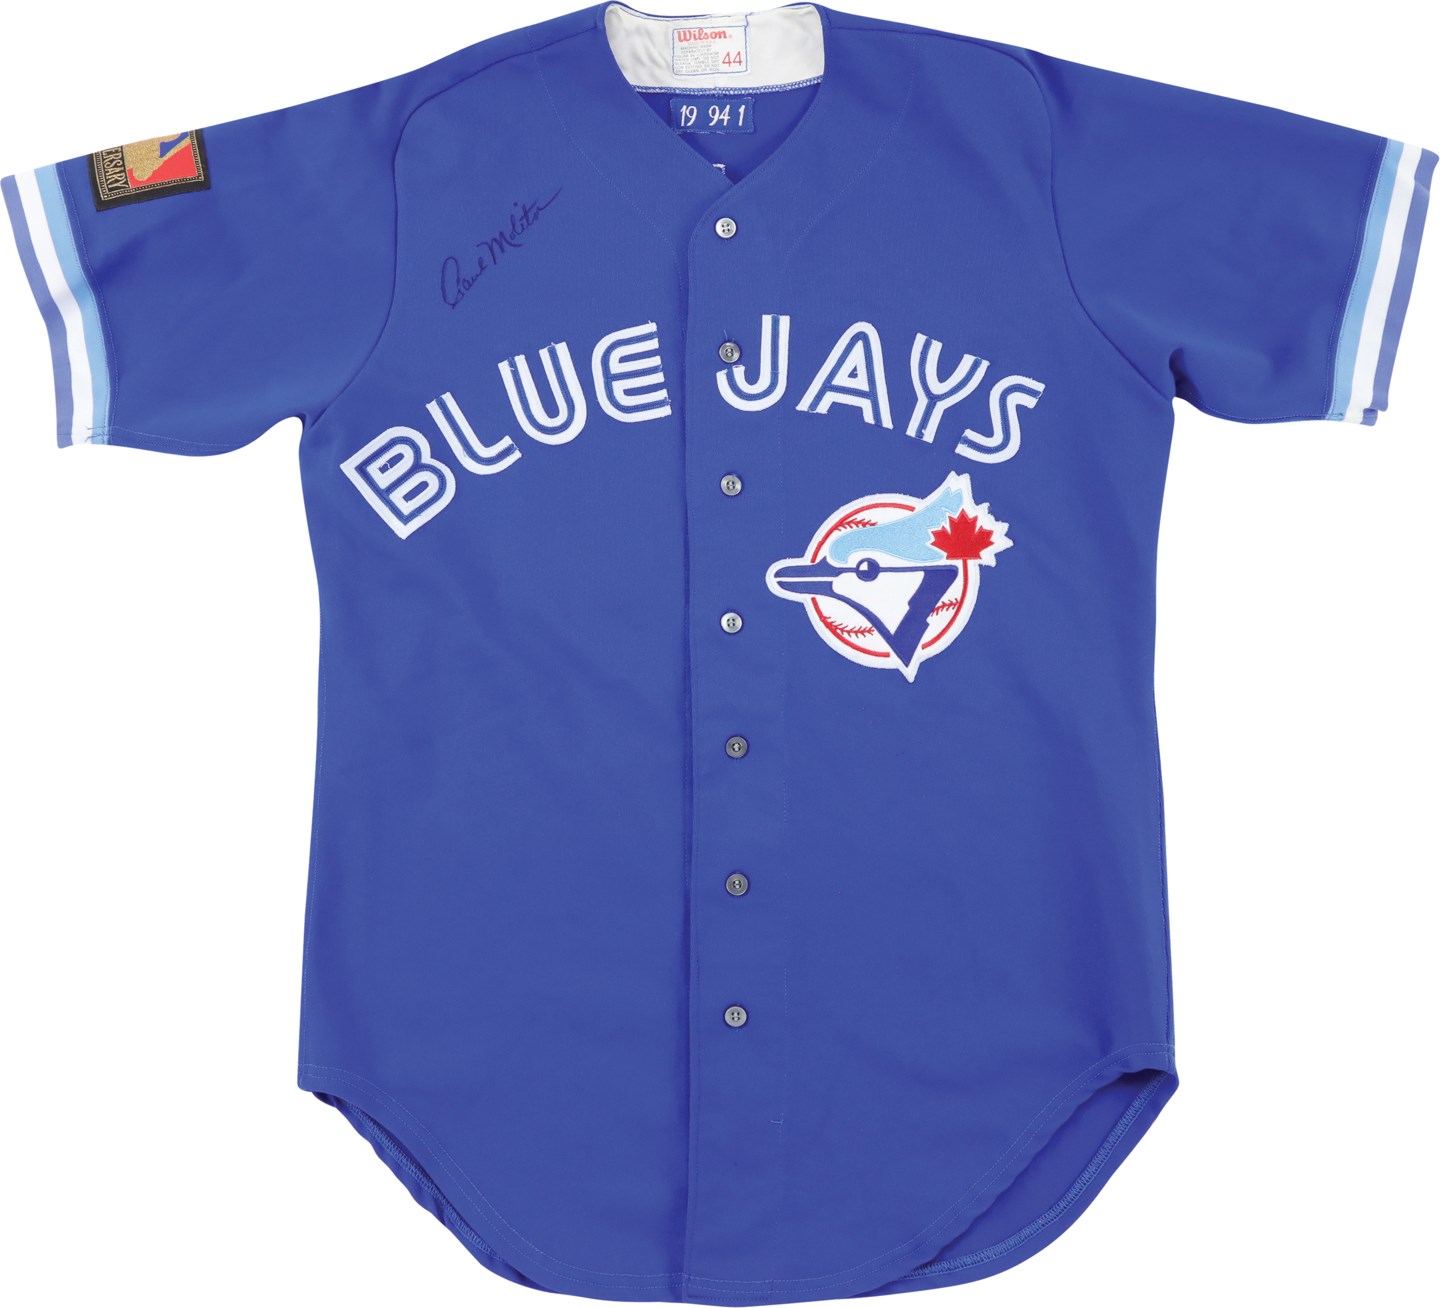 Baseball Equipment - 4/17/94 Paul Molitor Toronto Blue Jays Signed Game Worn Jersey (Photo-Matched)